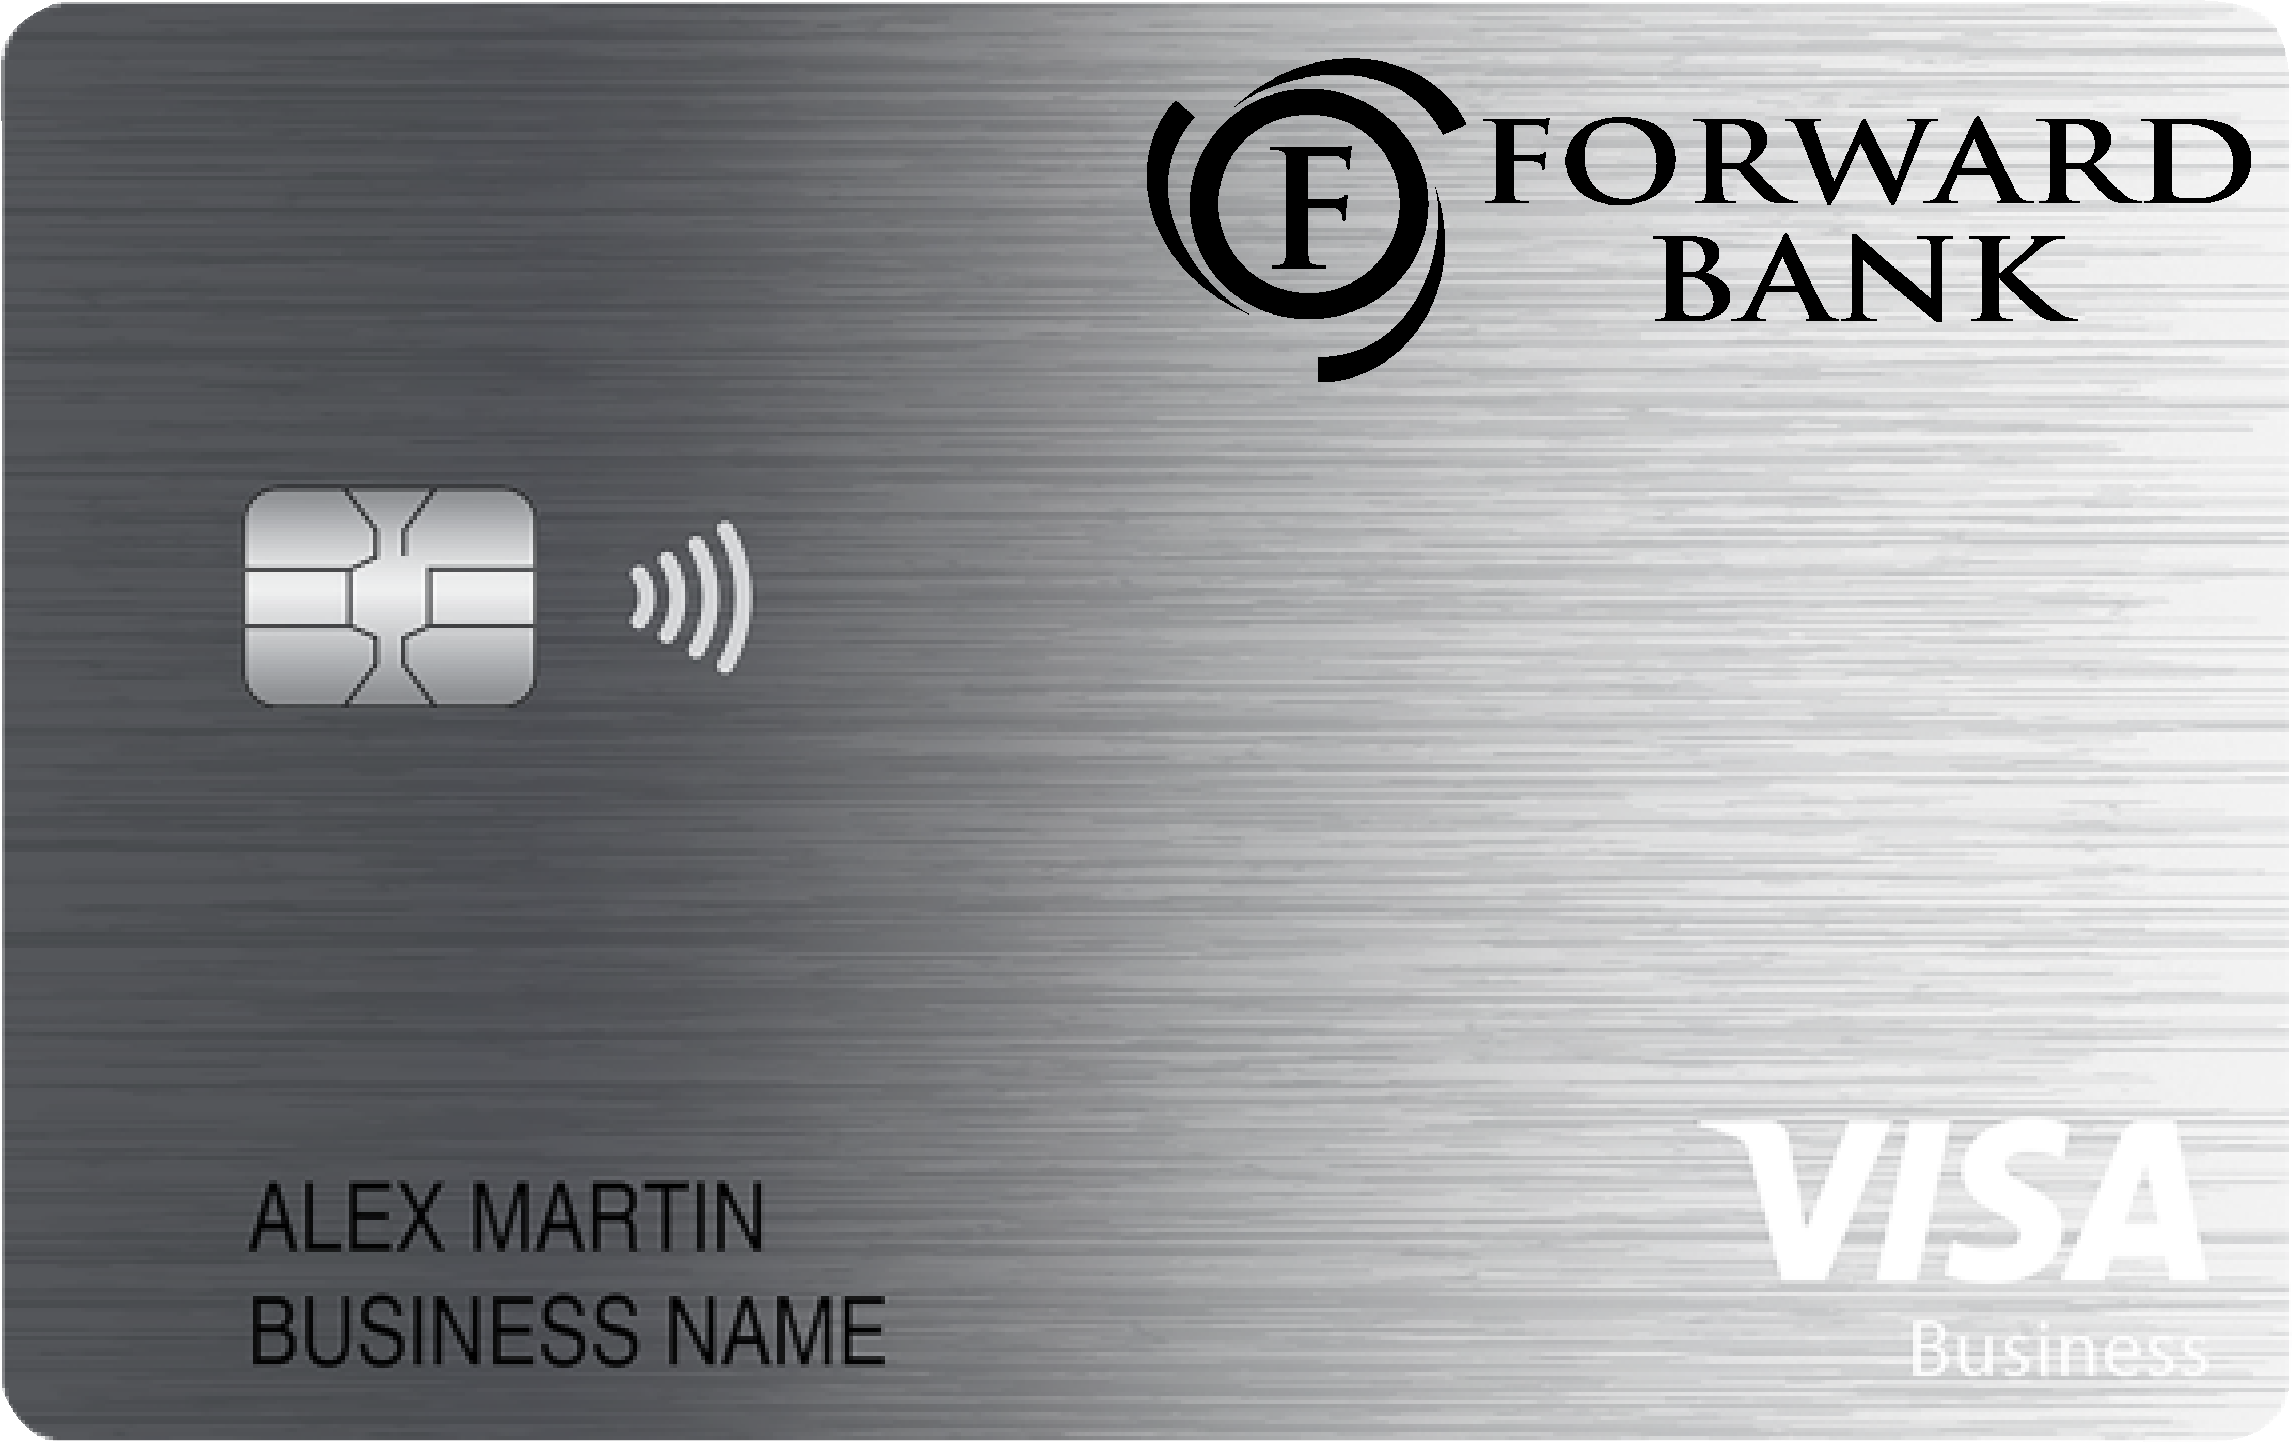 Forward Bank Business Real Rewards Card